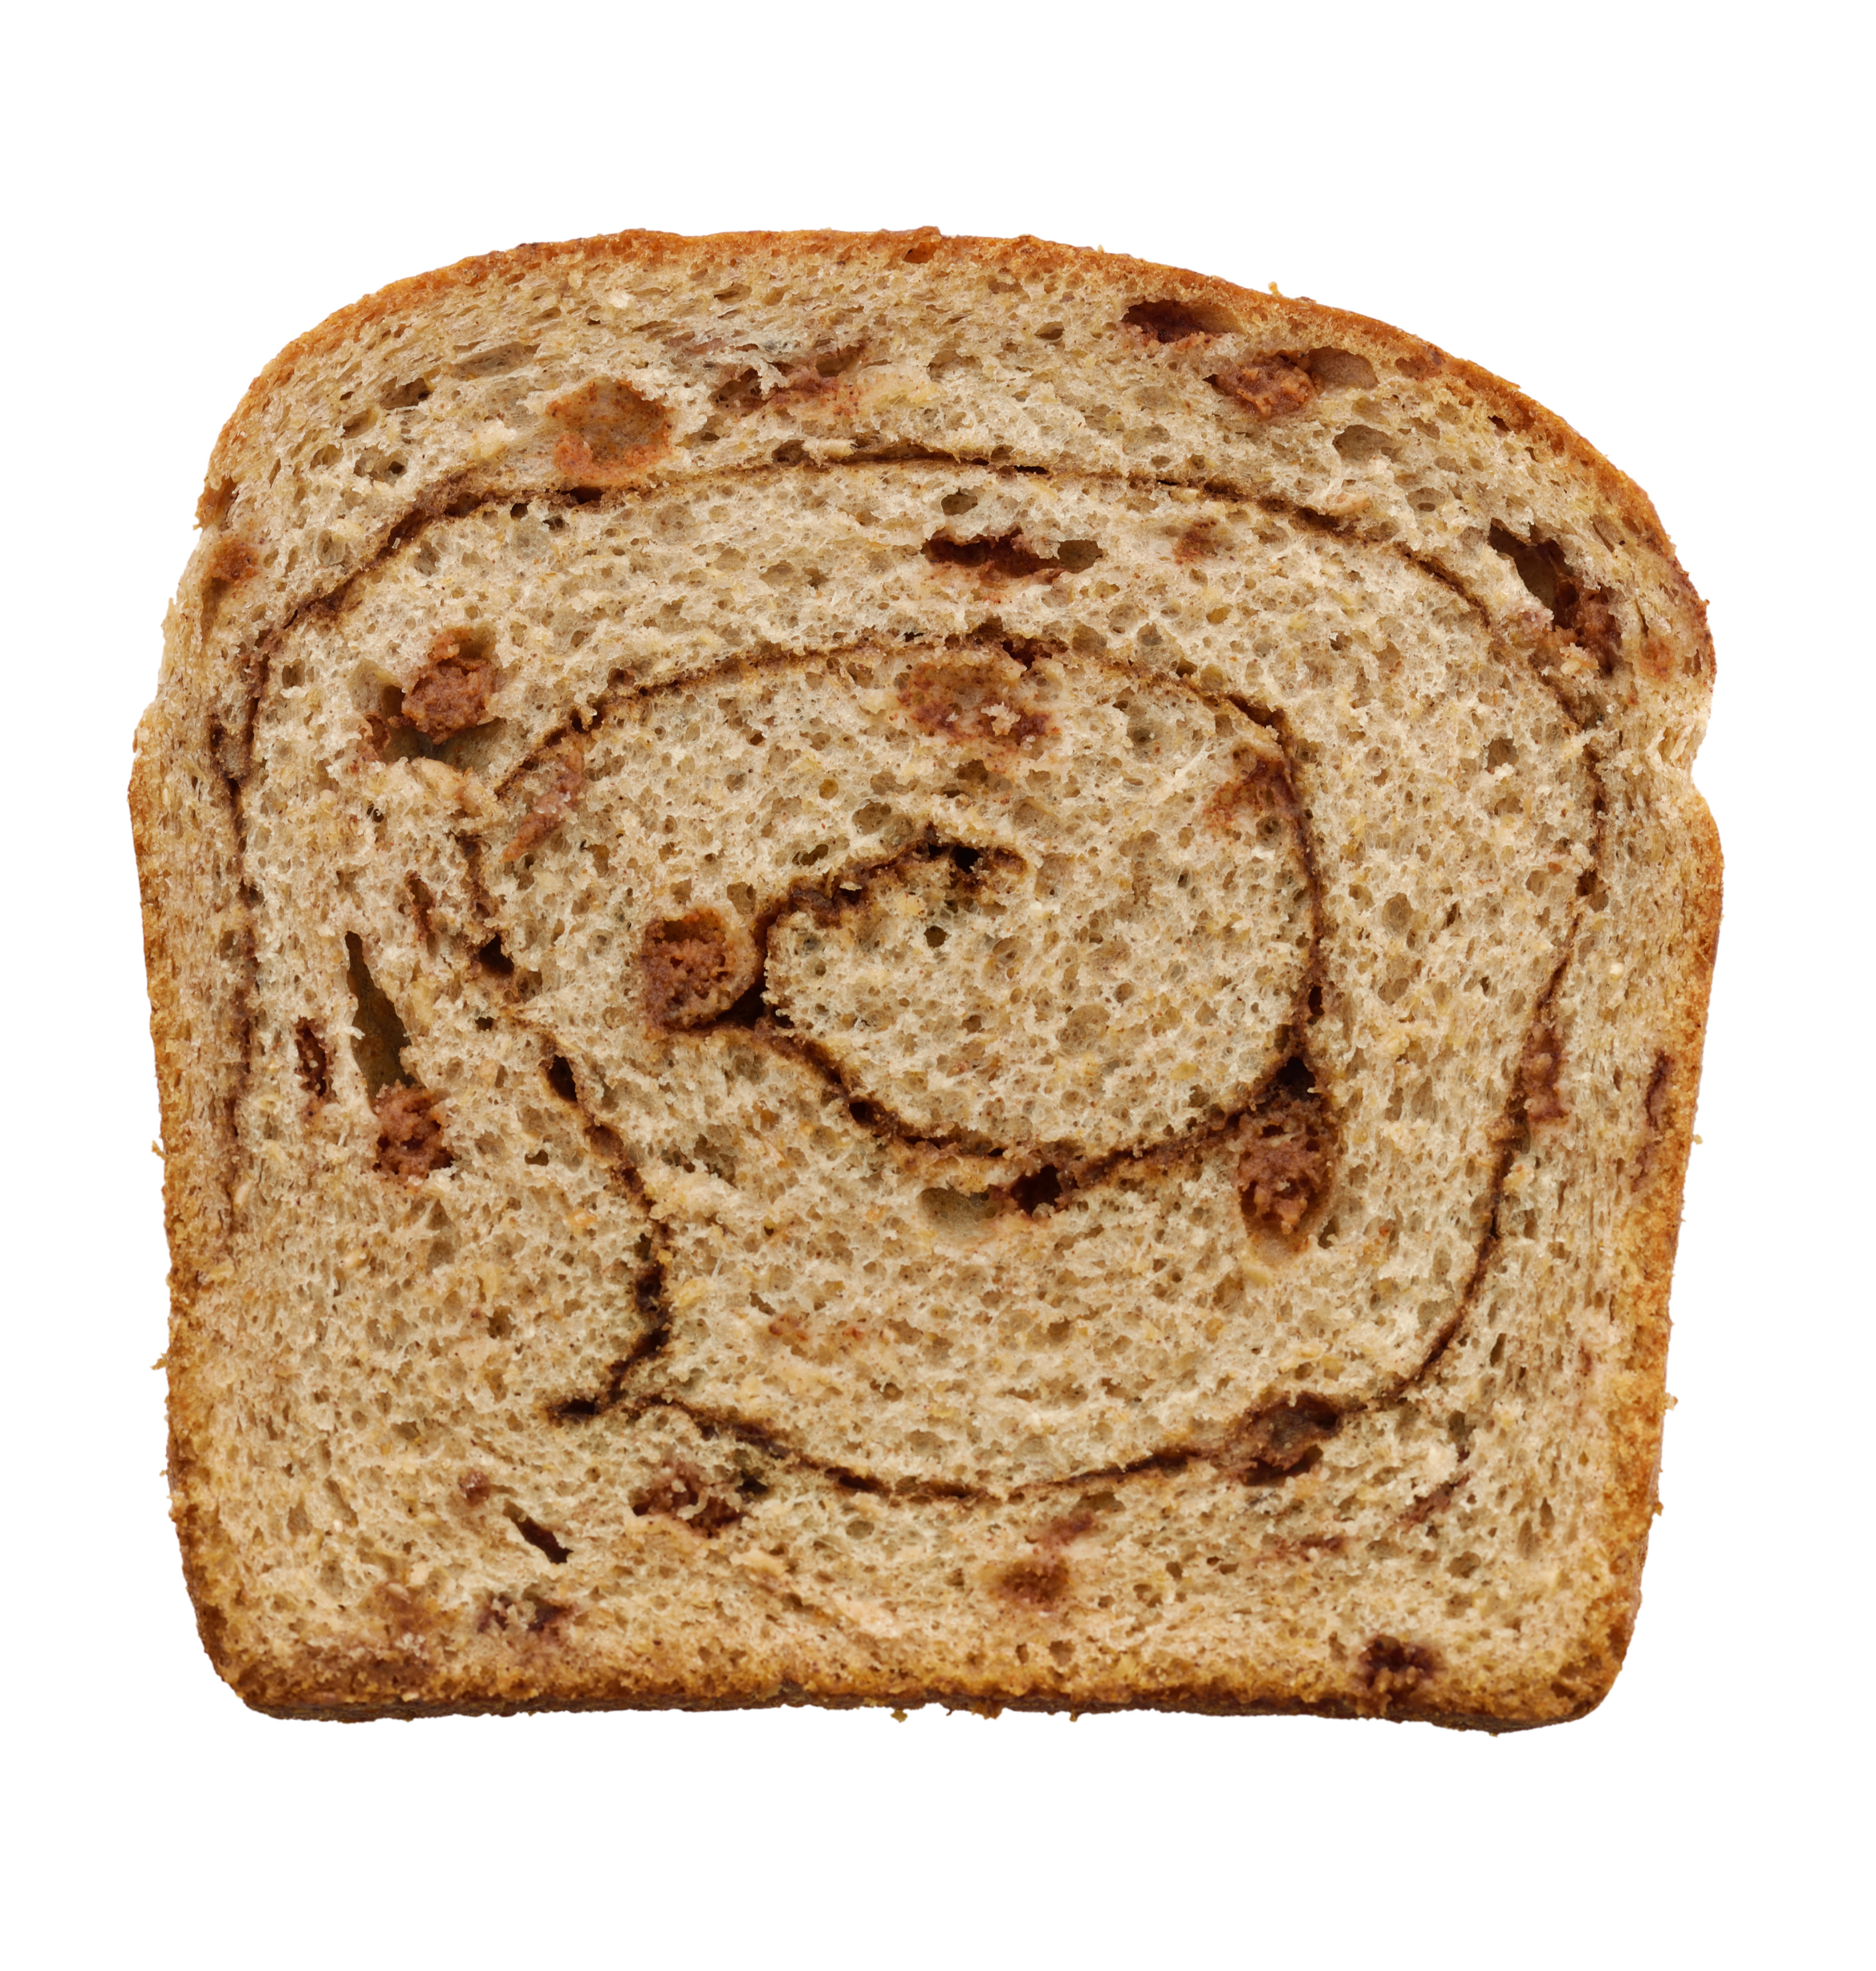 Cinnamon Swirl Raisin Bread